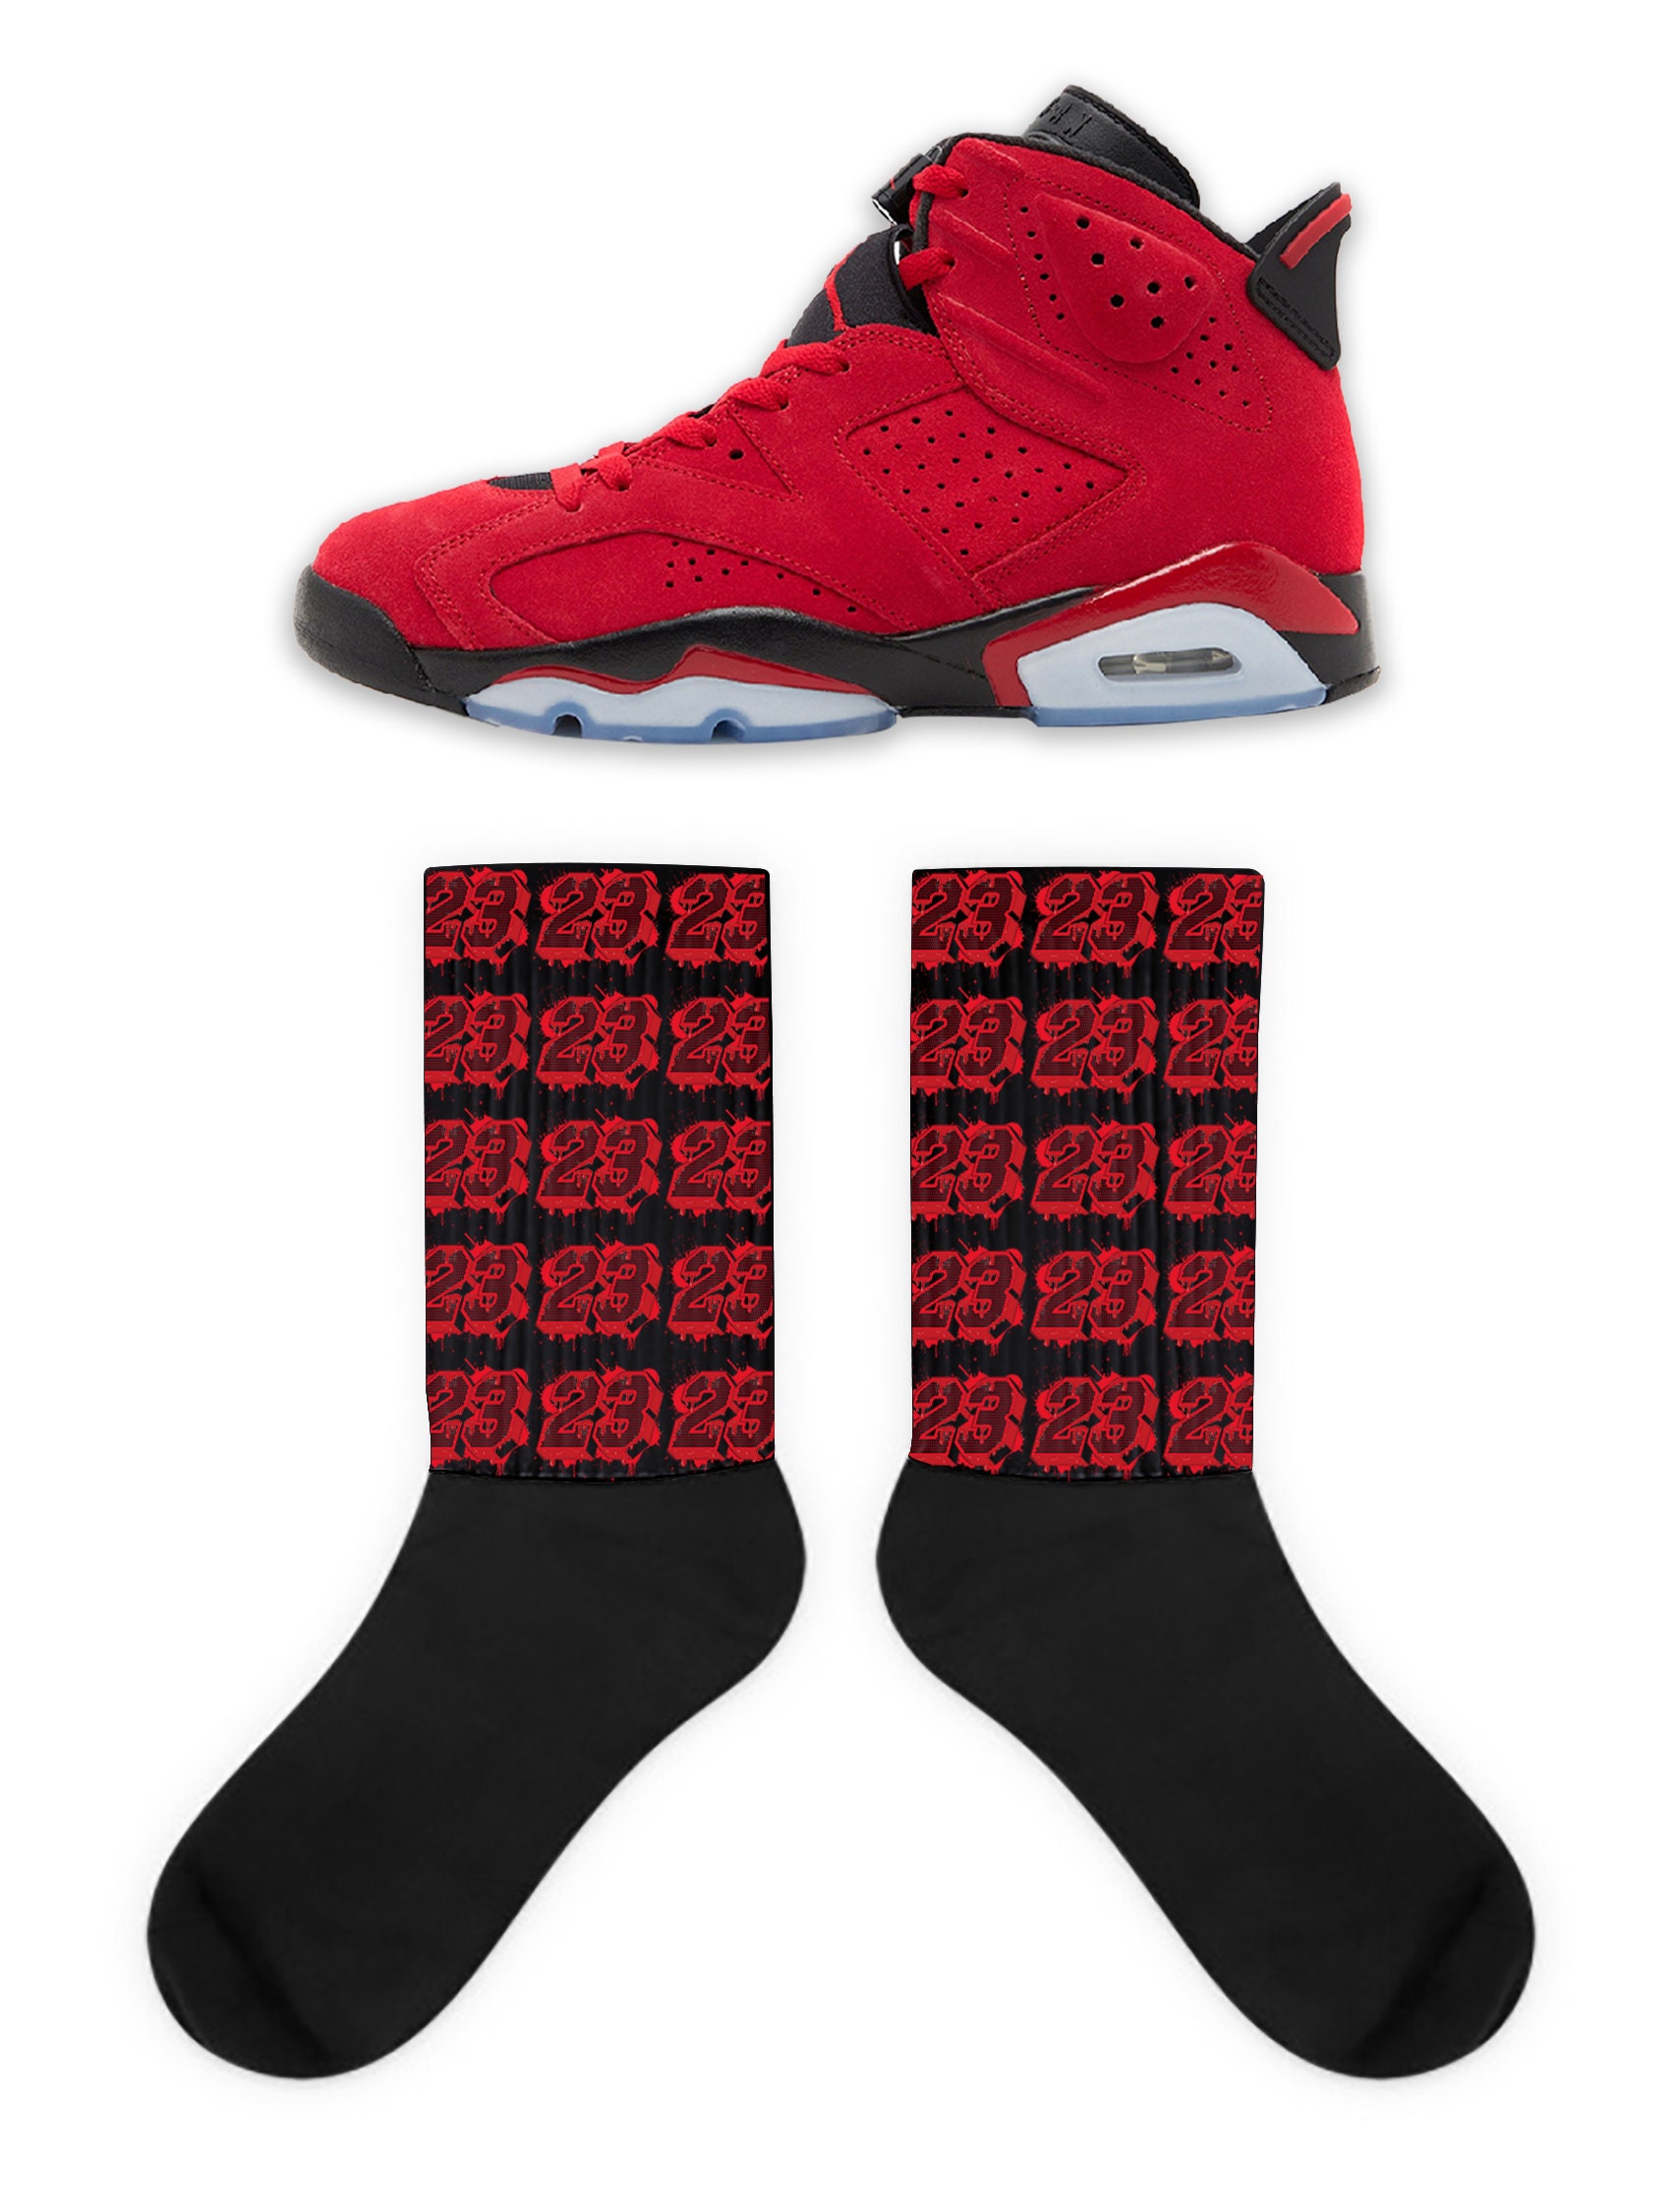 Jordan Air Jordan 6 Retro Toro Bravo Mens Lifestyle Shoes Red